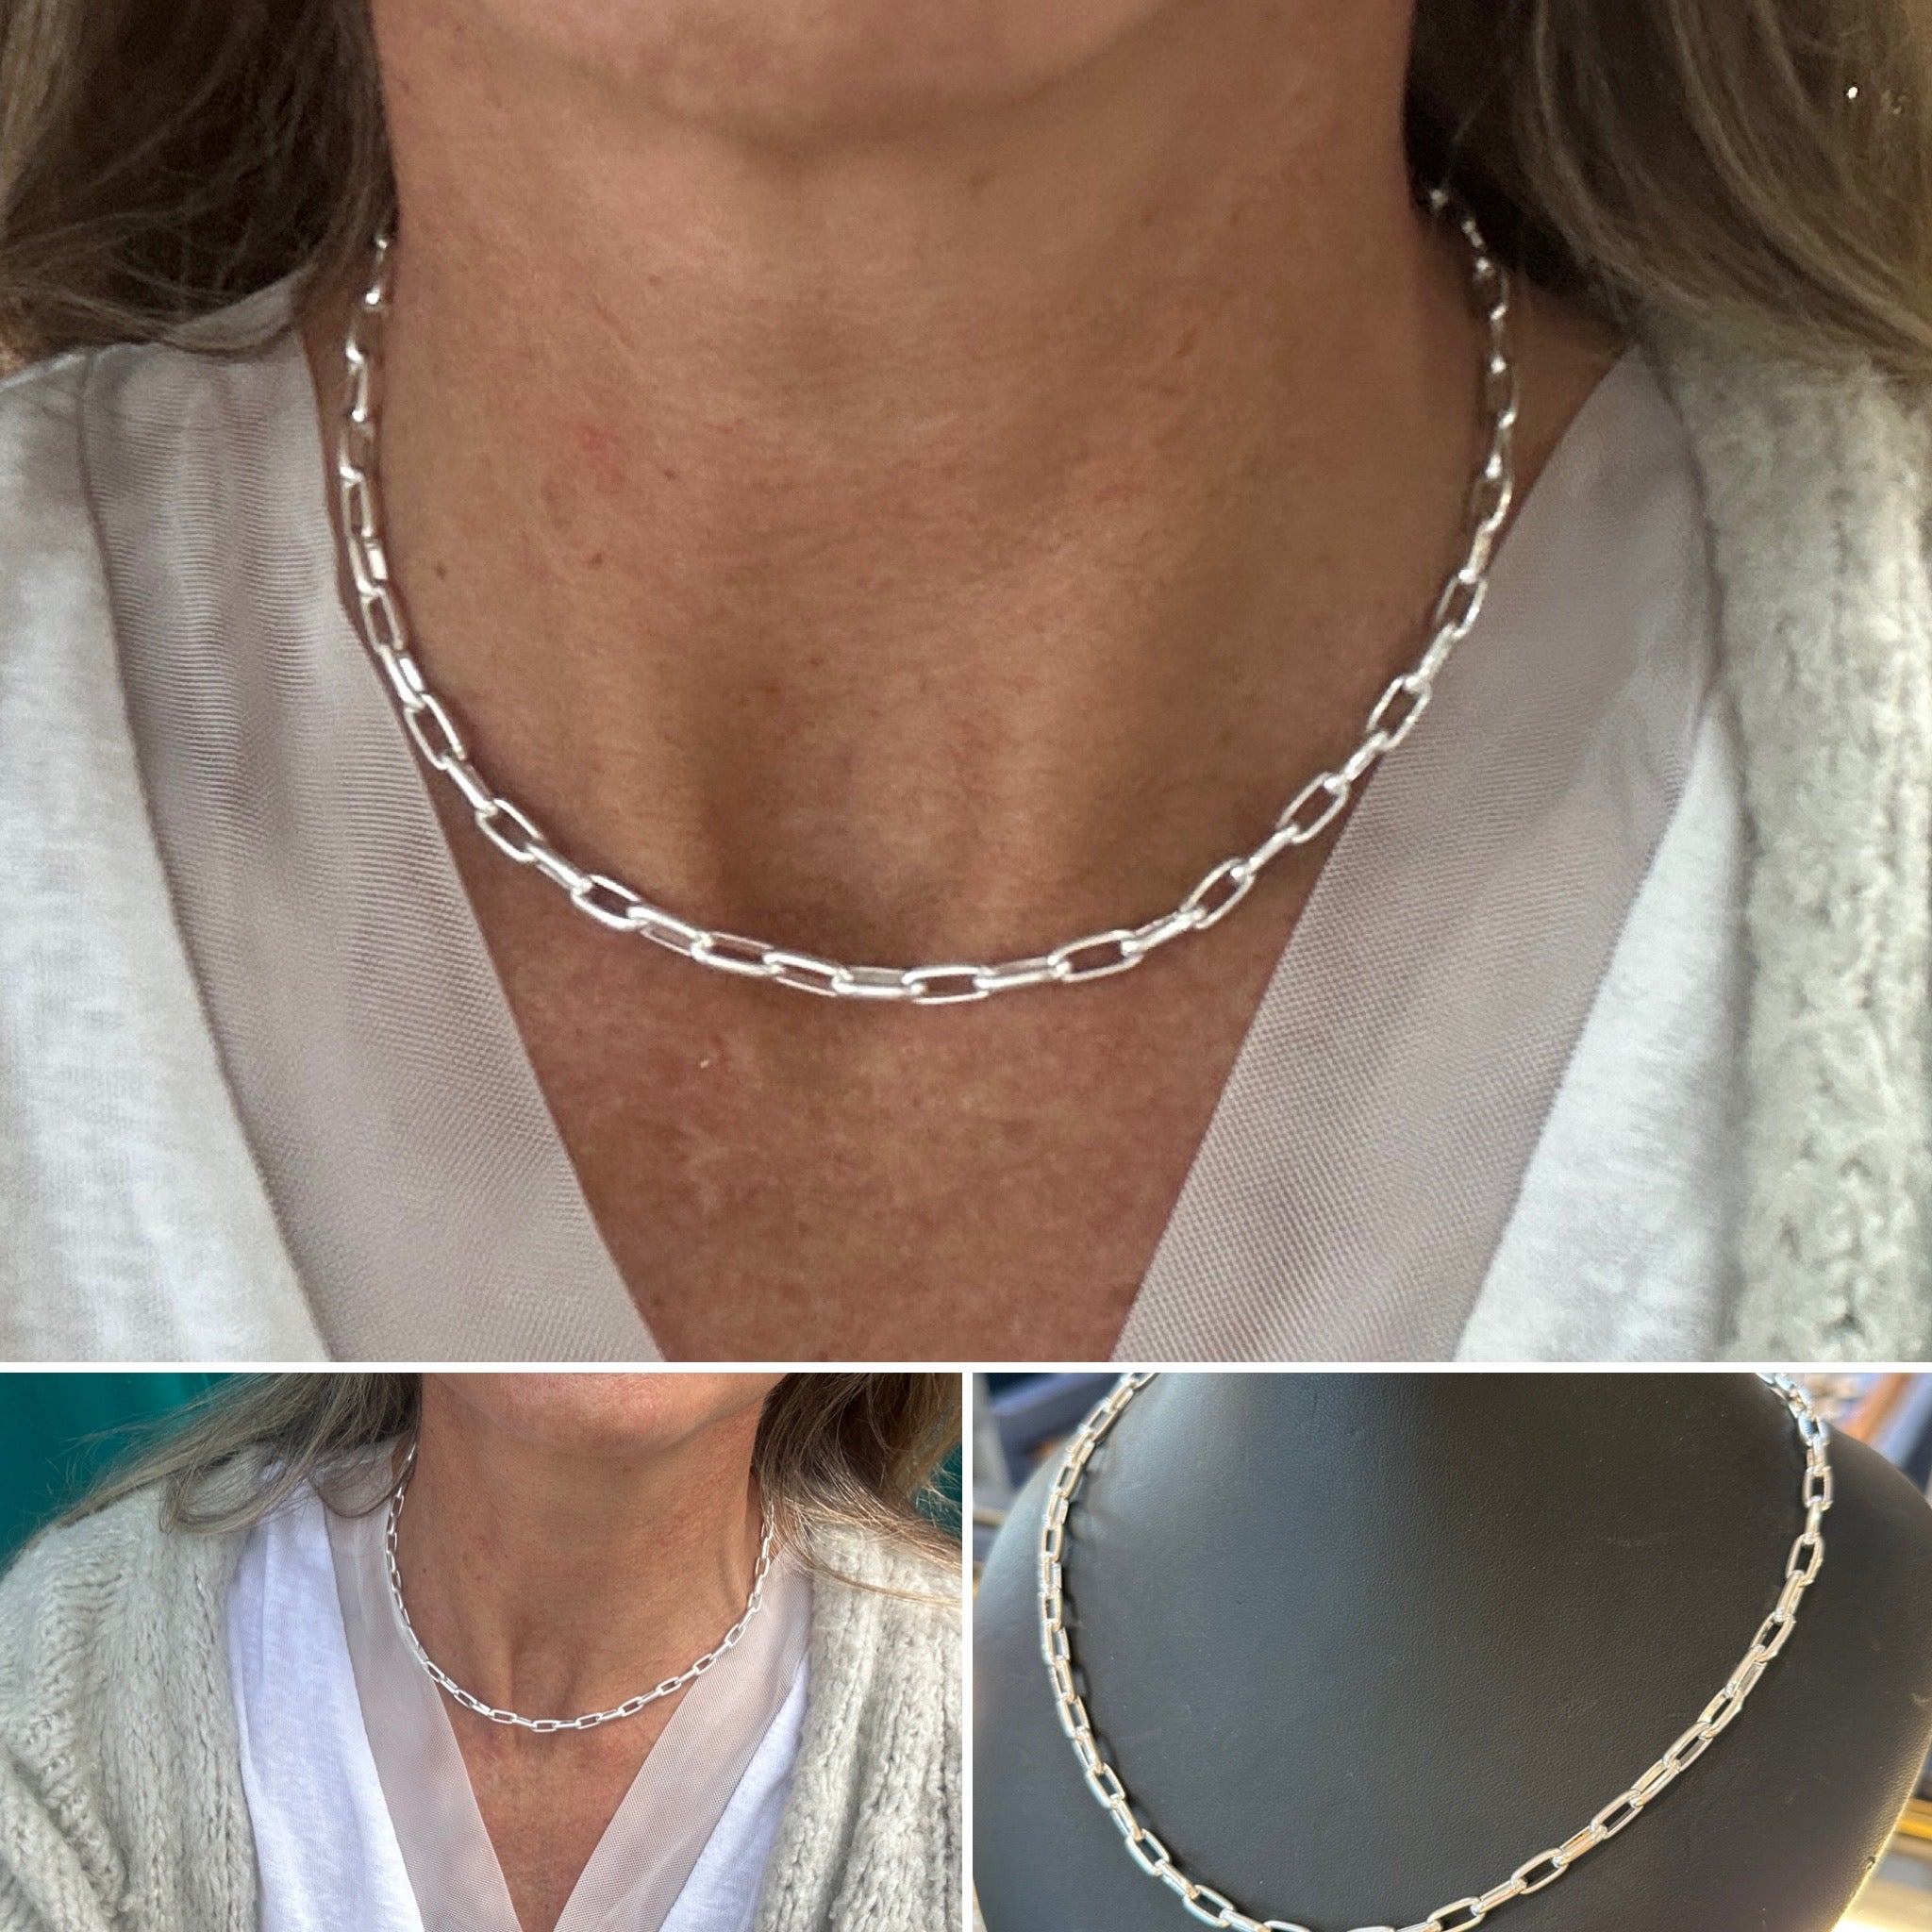 Caitlin: a silver necklace